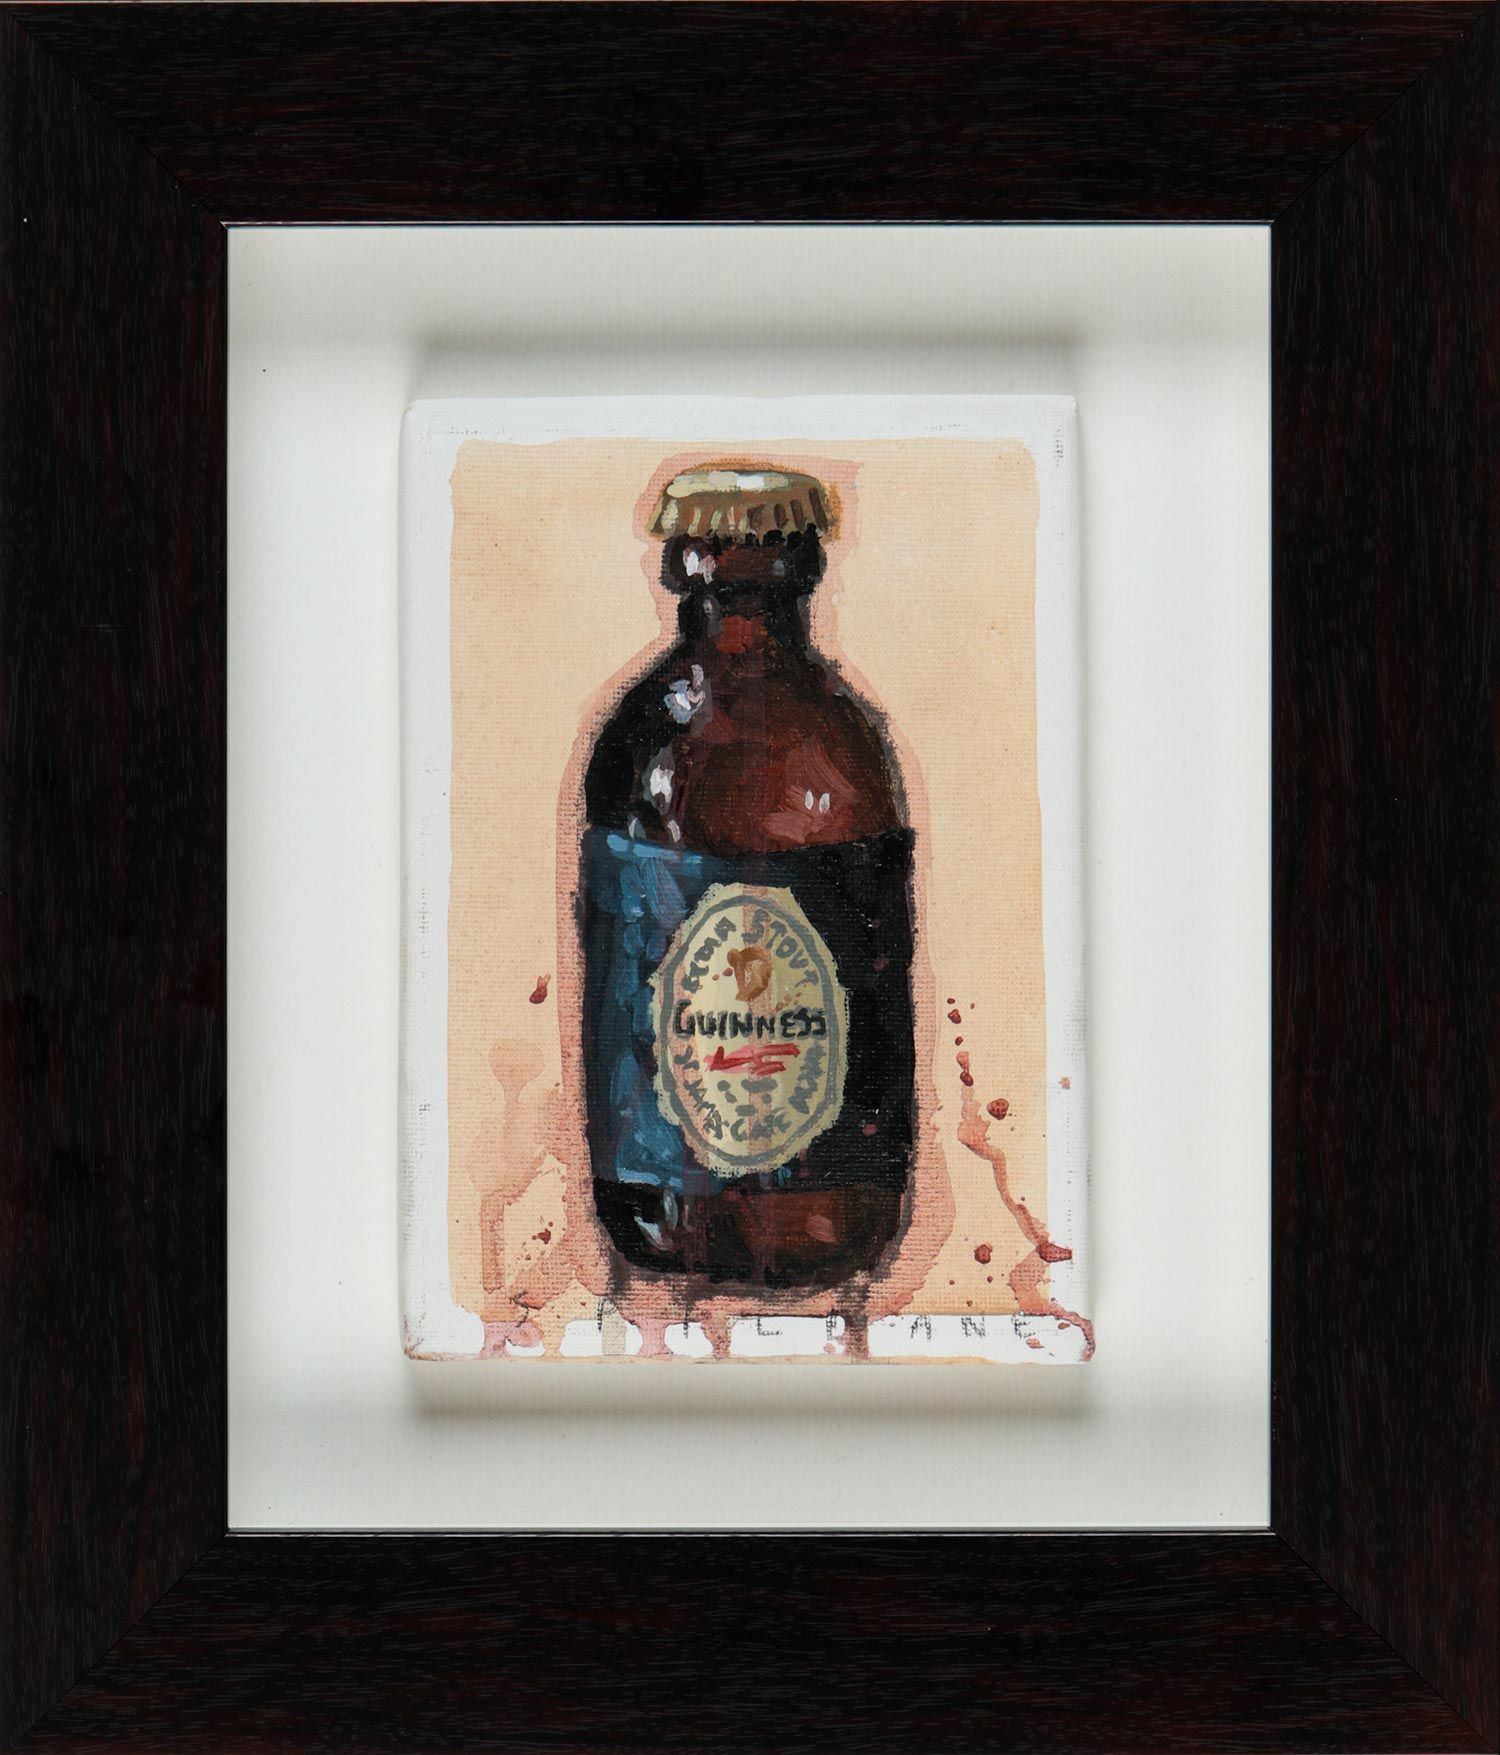 BOTTLE OF GUINNESS by Spillane at Ross's Online Art Auctions